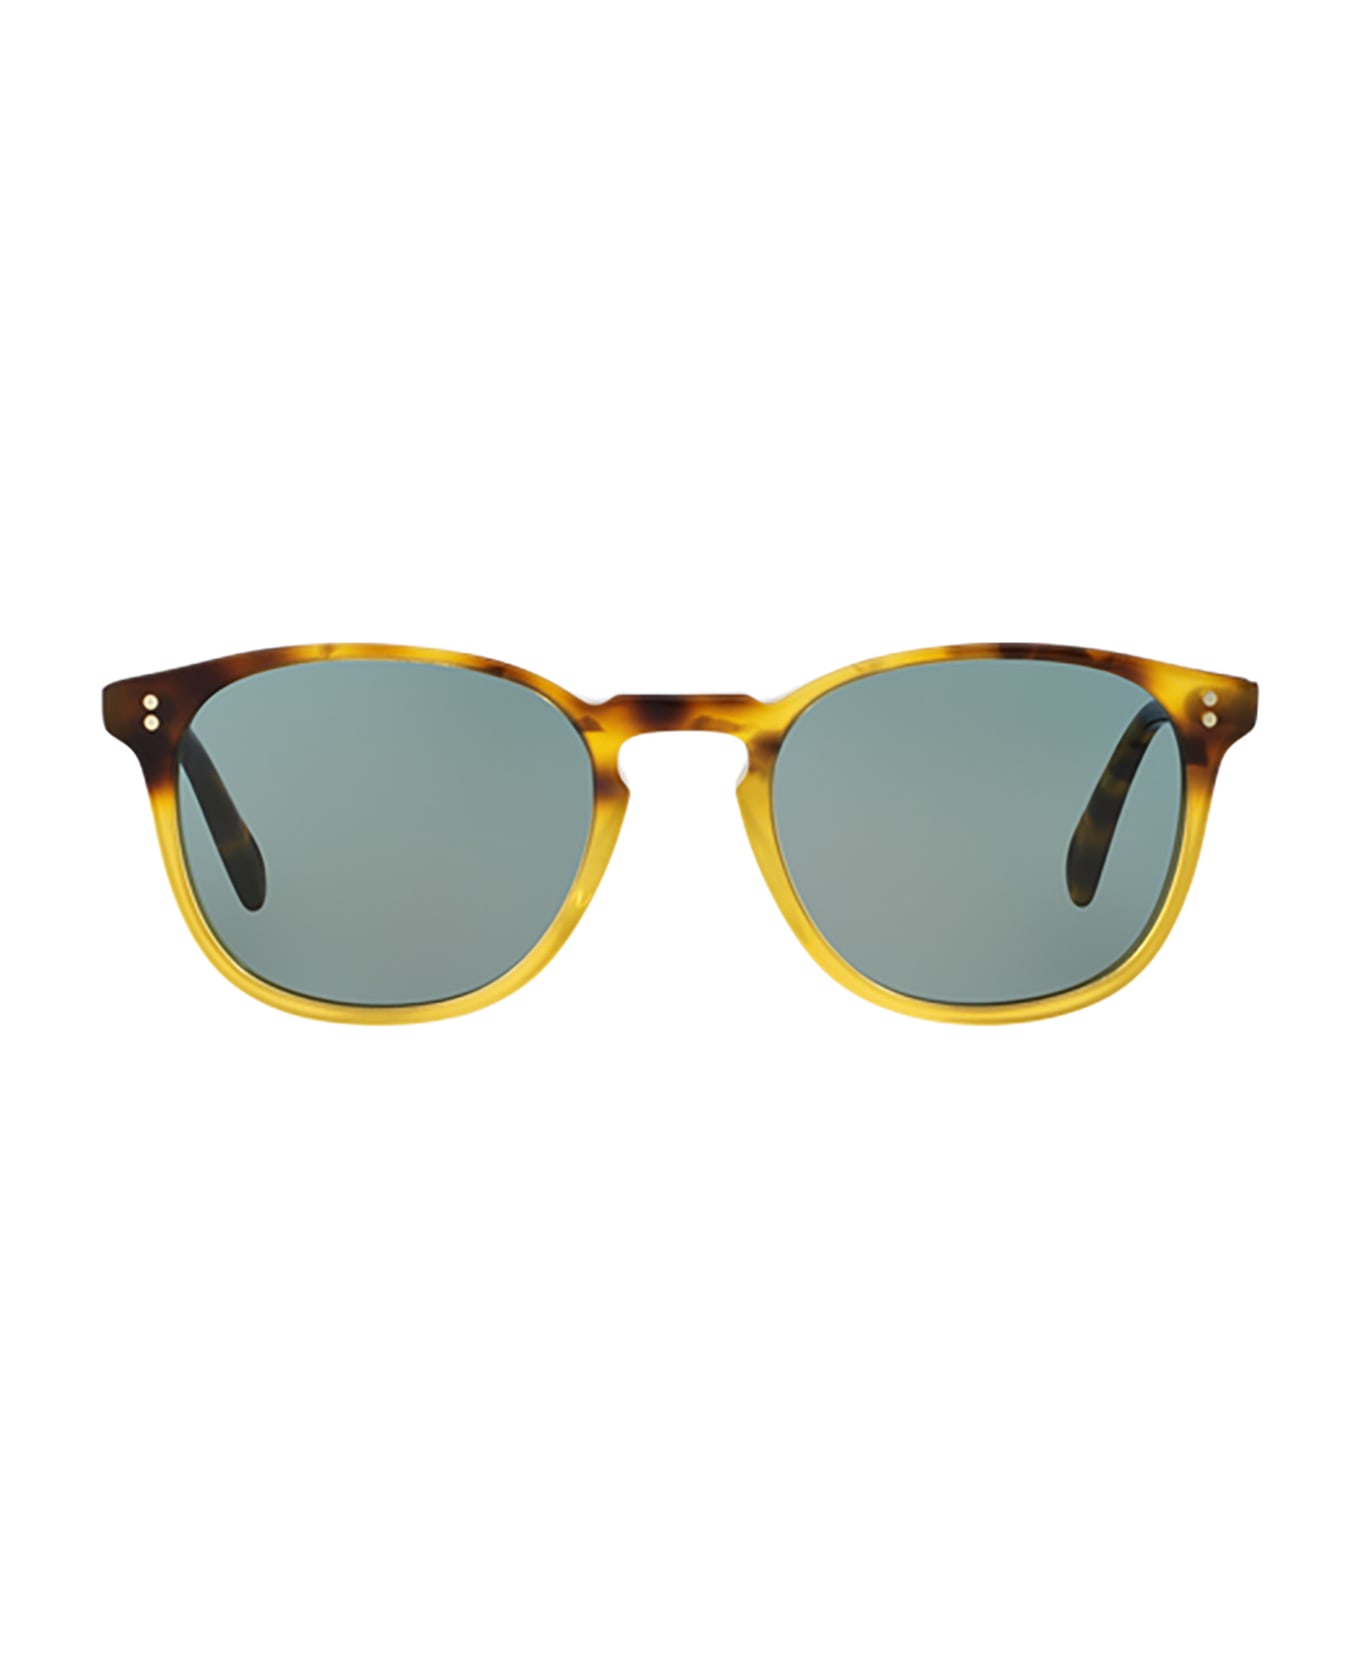 Oliver Peoples Ov5298su Vintage Brown Tortoise Grad Sunglasses - Vintage Brown Tortoise Grad